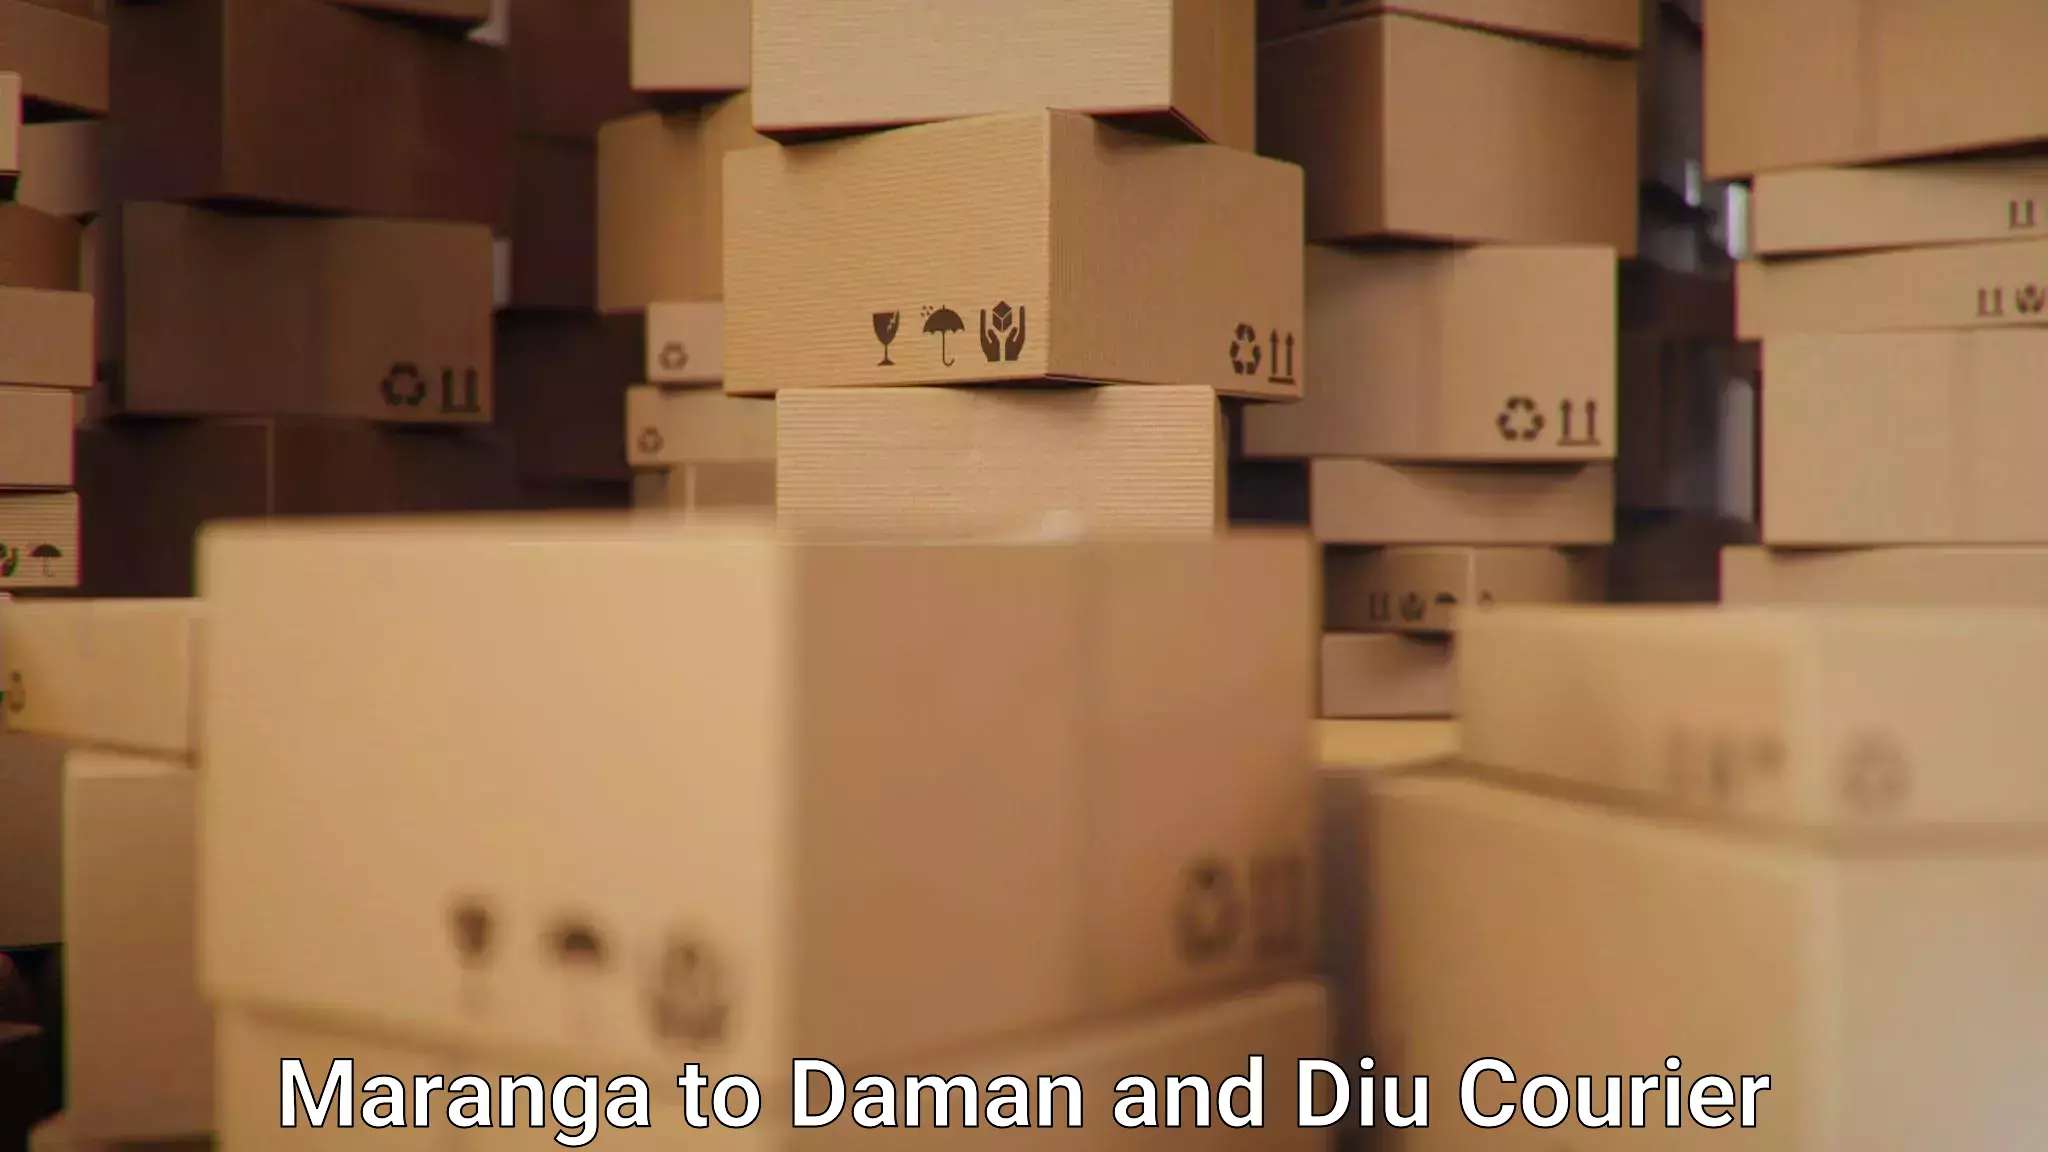 International courier networks Maranga to Daman and Diu